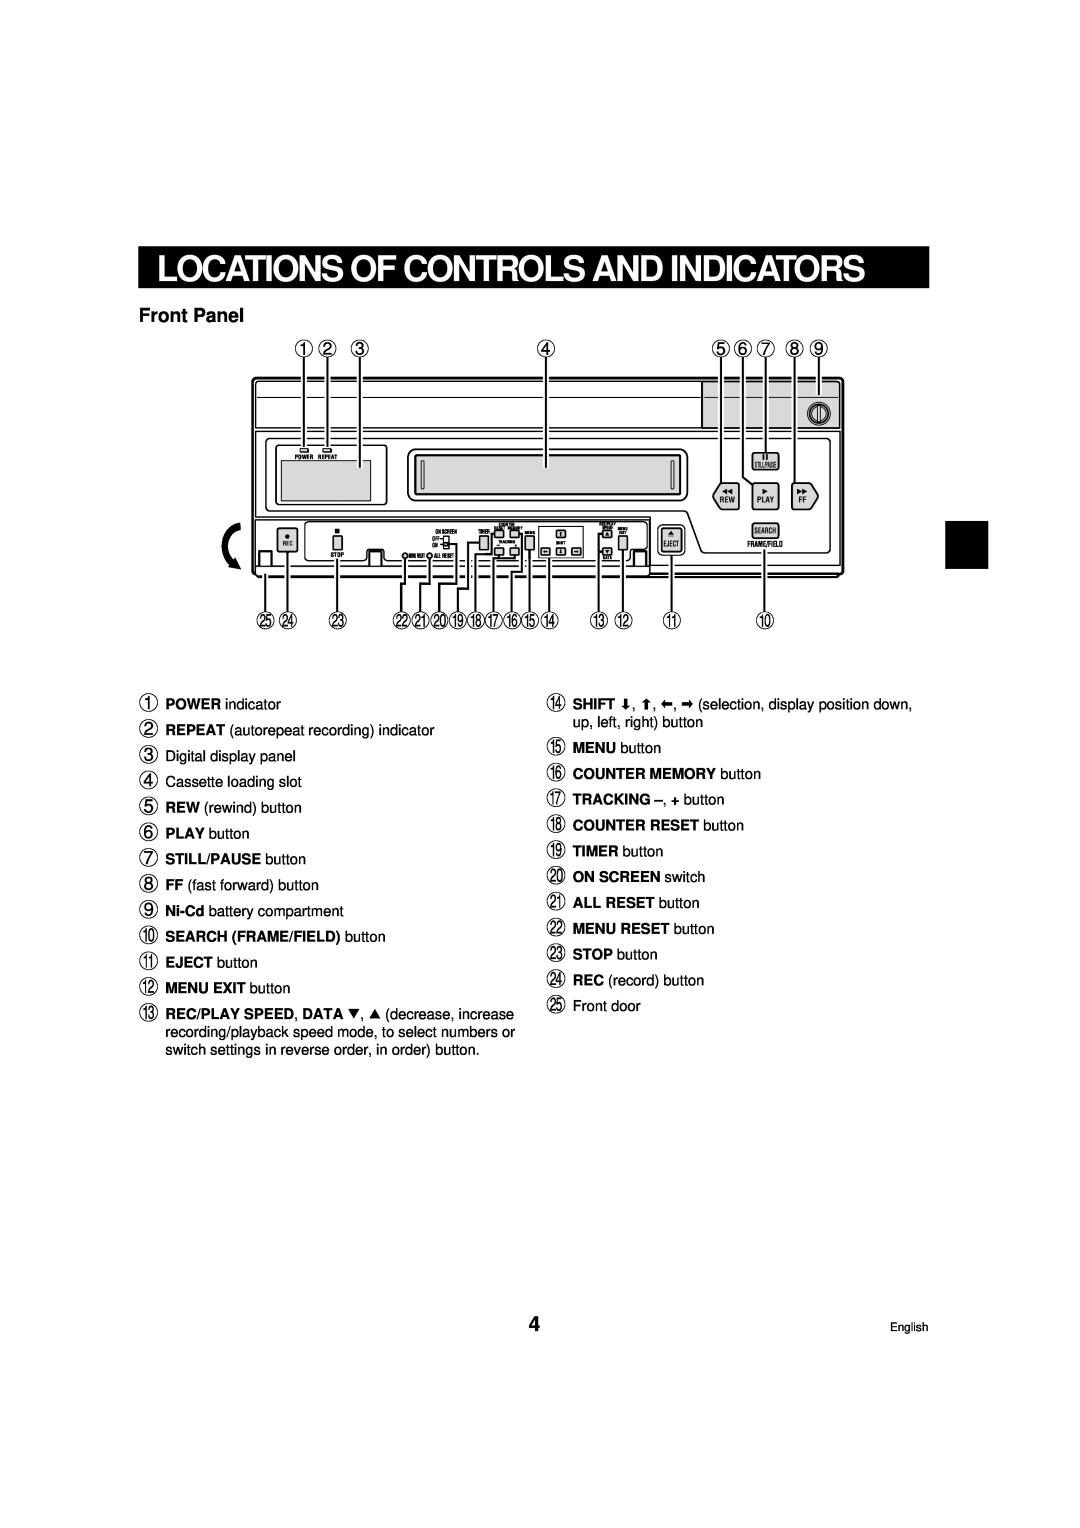 Sanyo RD2QD/NA, DTL-4800 instruction manual Locations Of Controls And Indicators, Front Panel, Rqponmlkj 